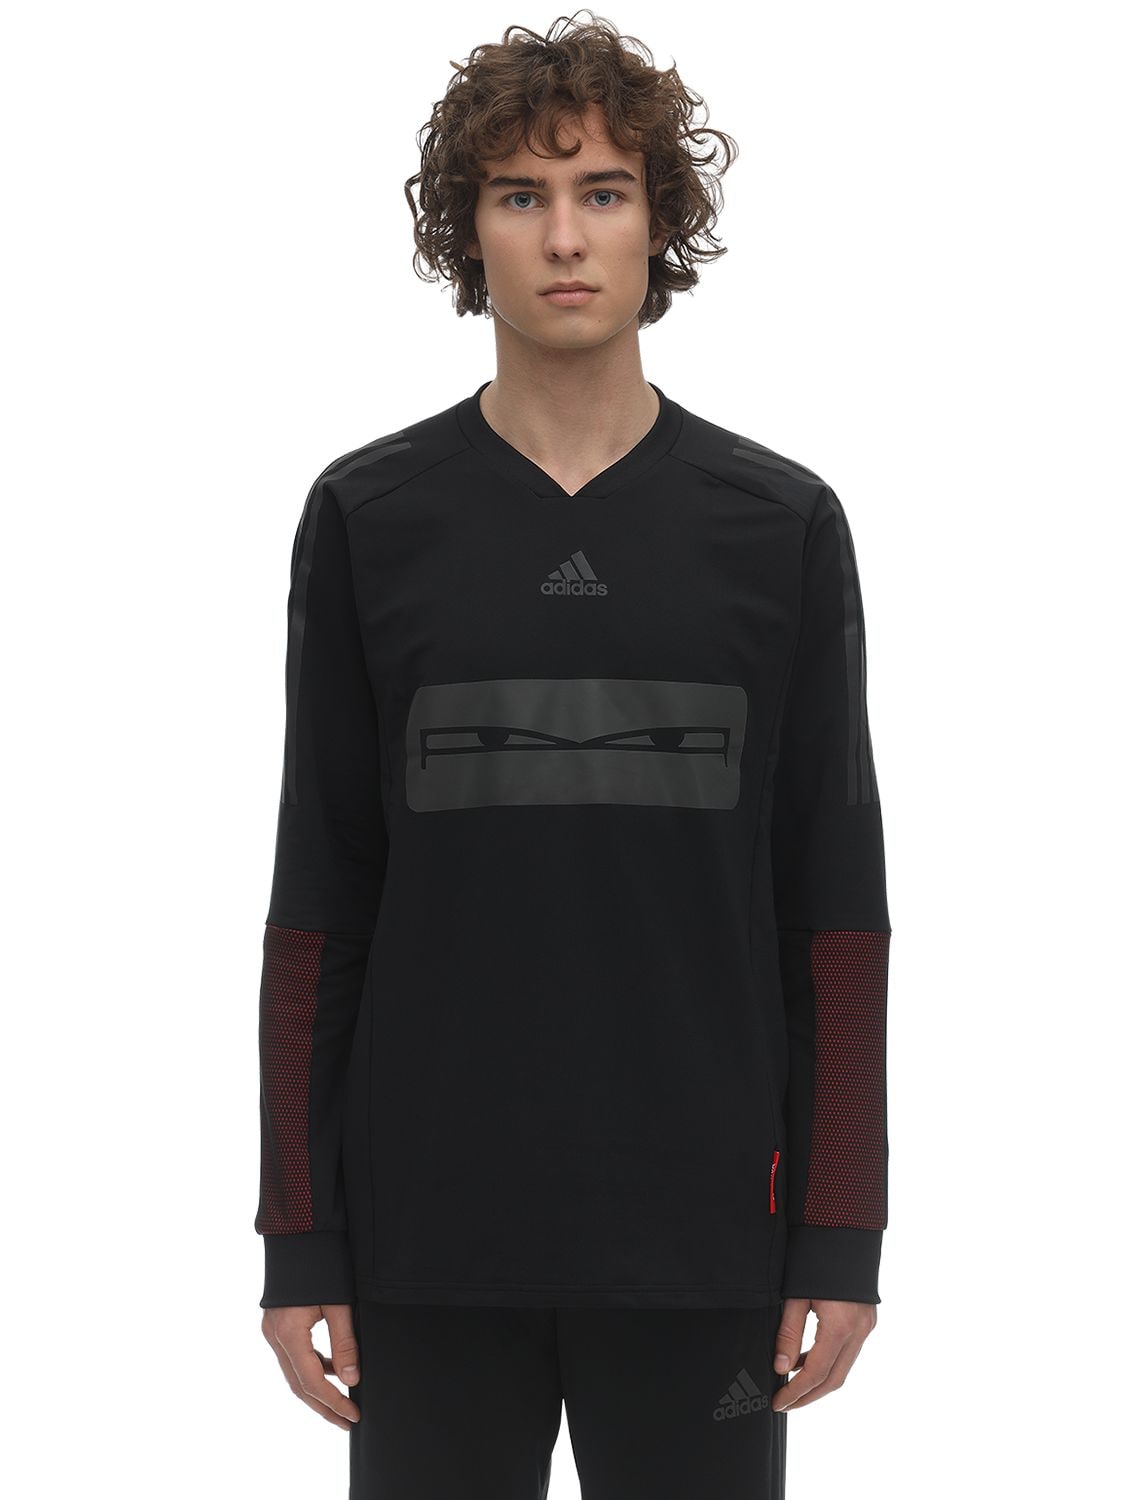 Adidas Football Tech Sweatshirt W/reflective Details In Black